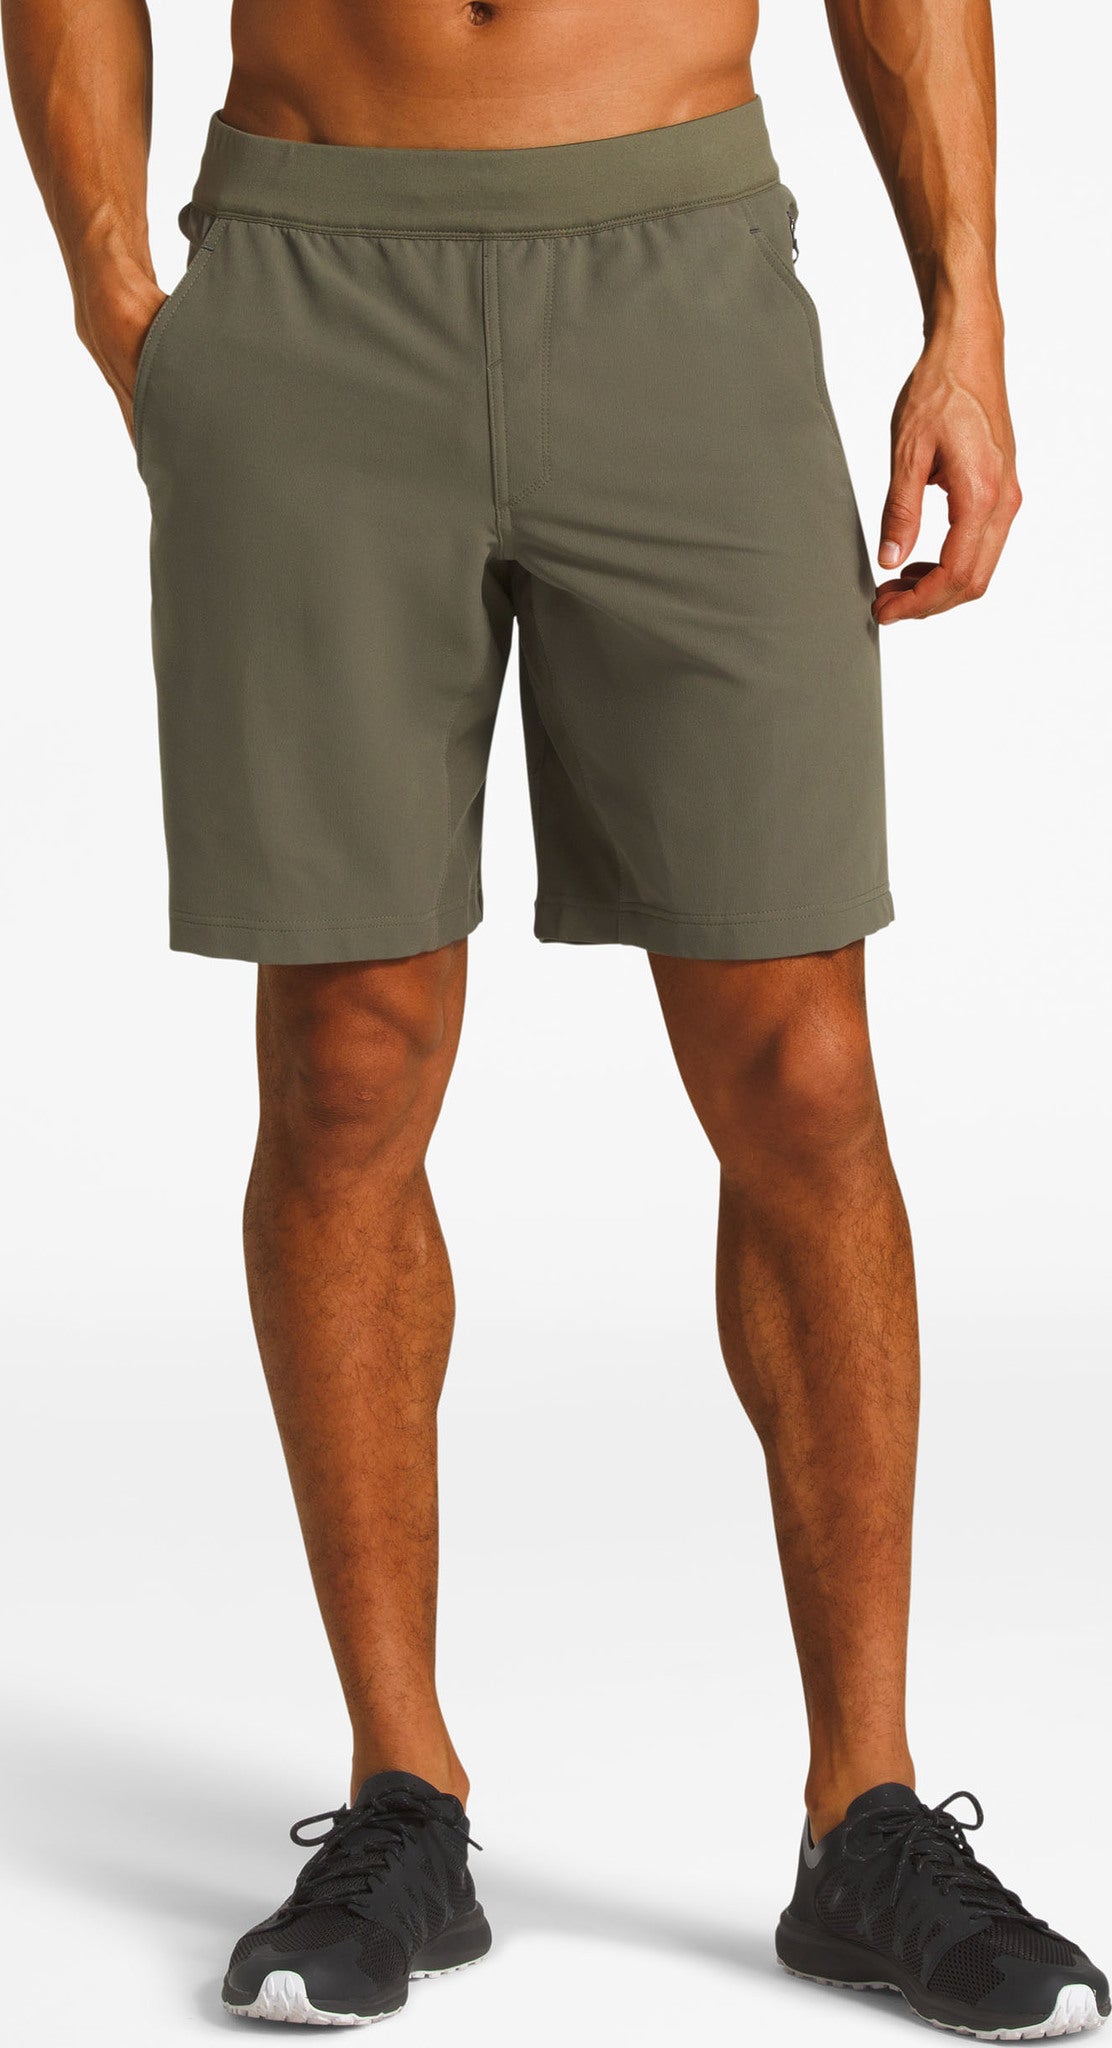 kilowatt shorts